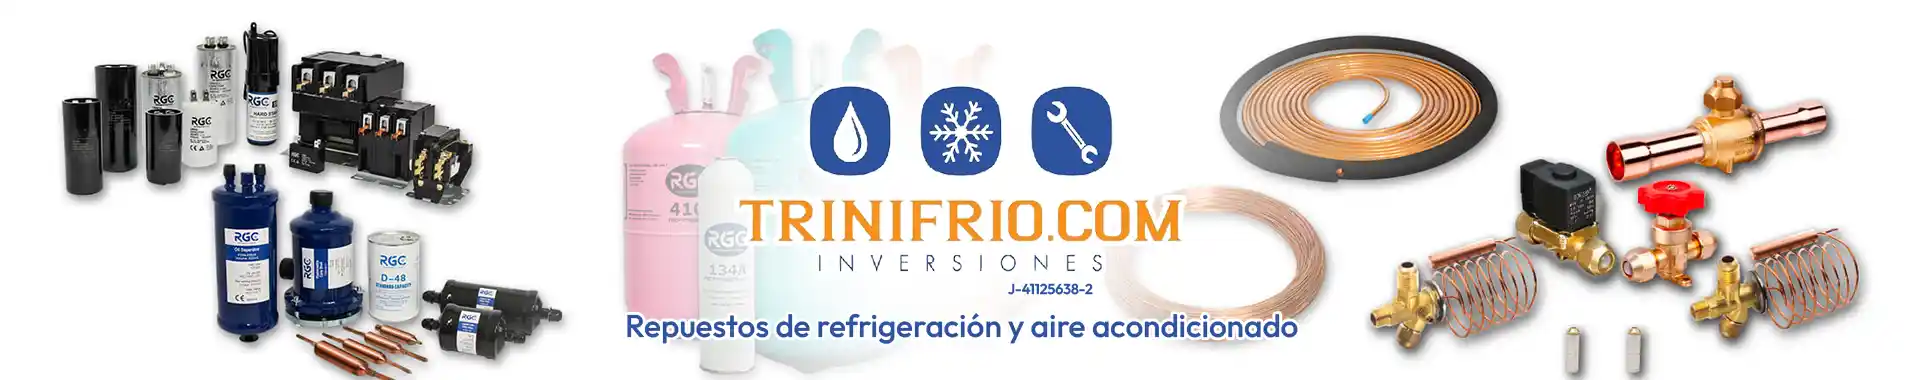 Imagen 1 del perfil de Inversiones Trinifrio.com